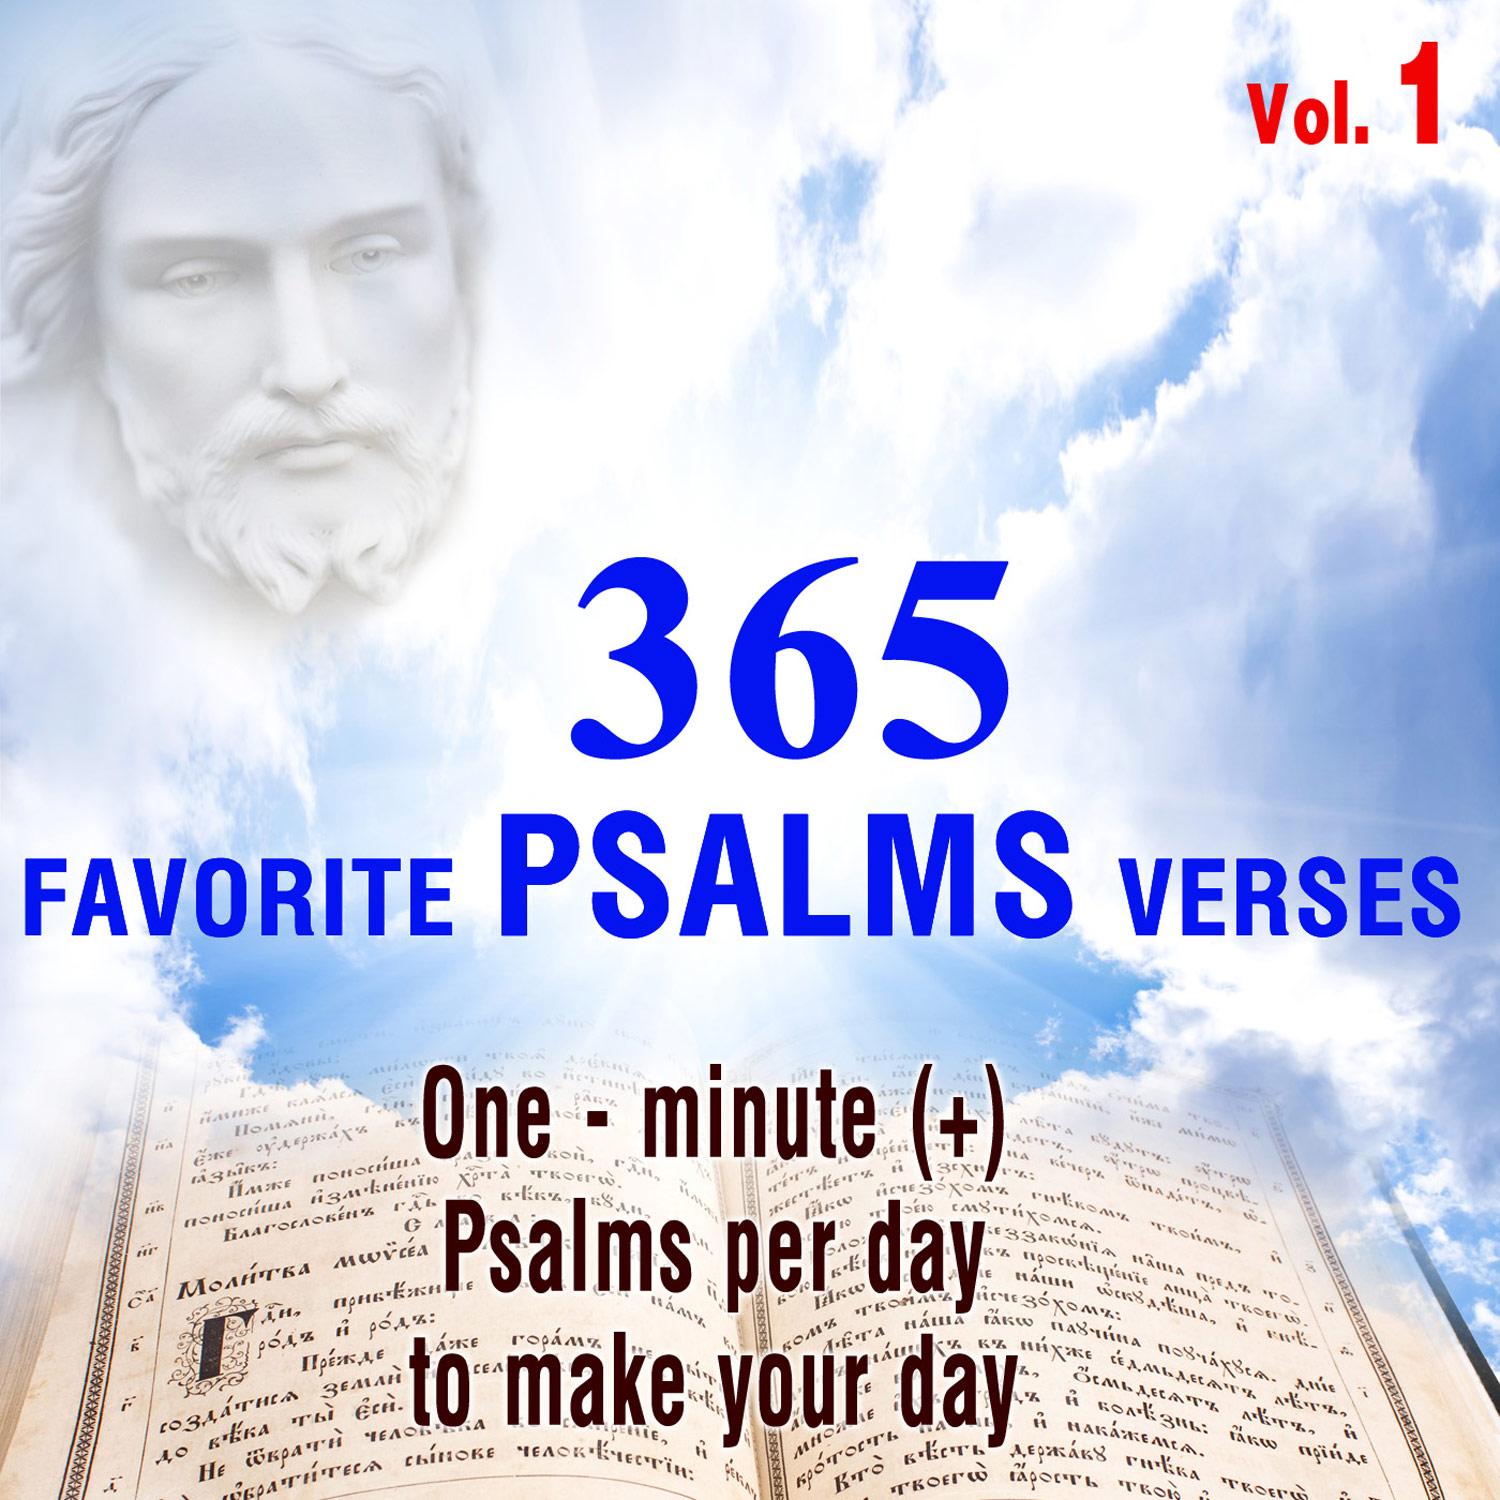 Psalms No. 145